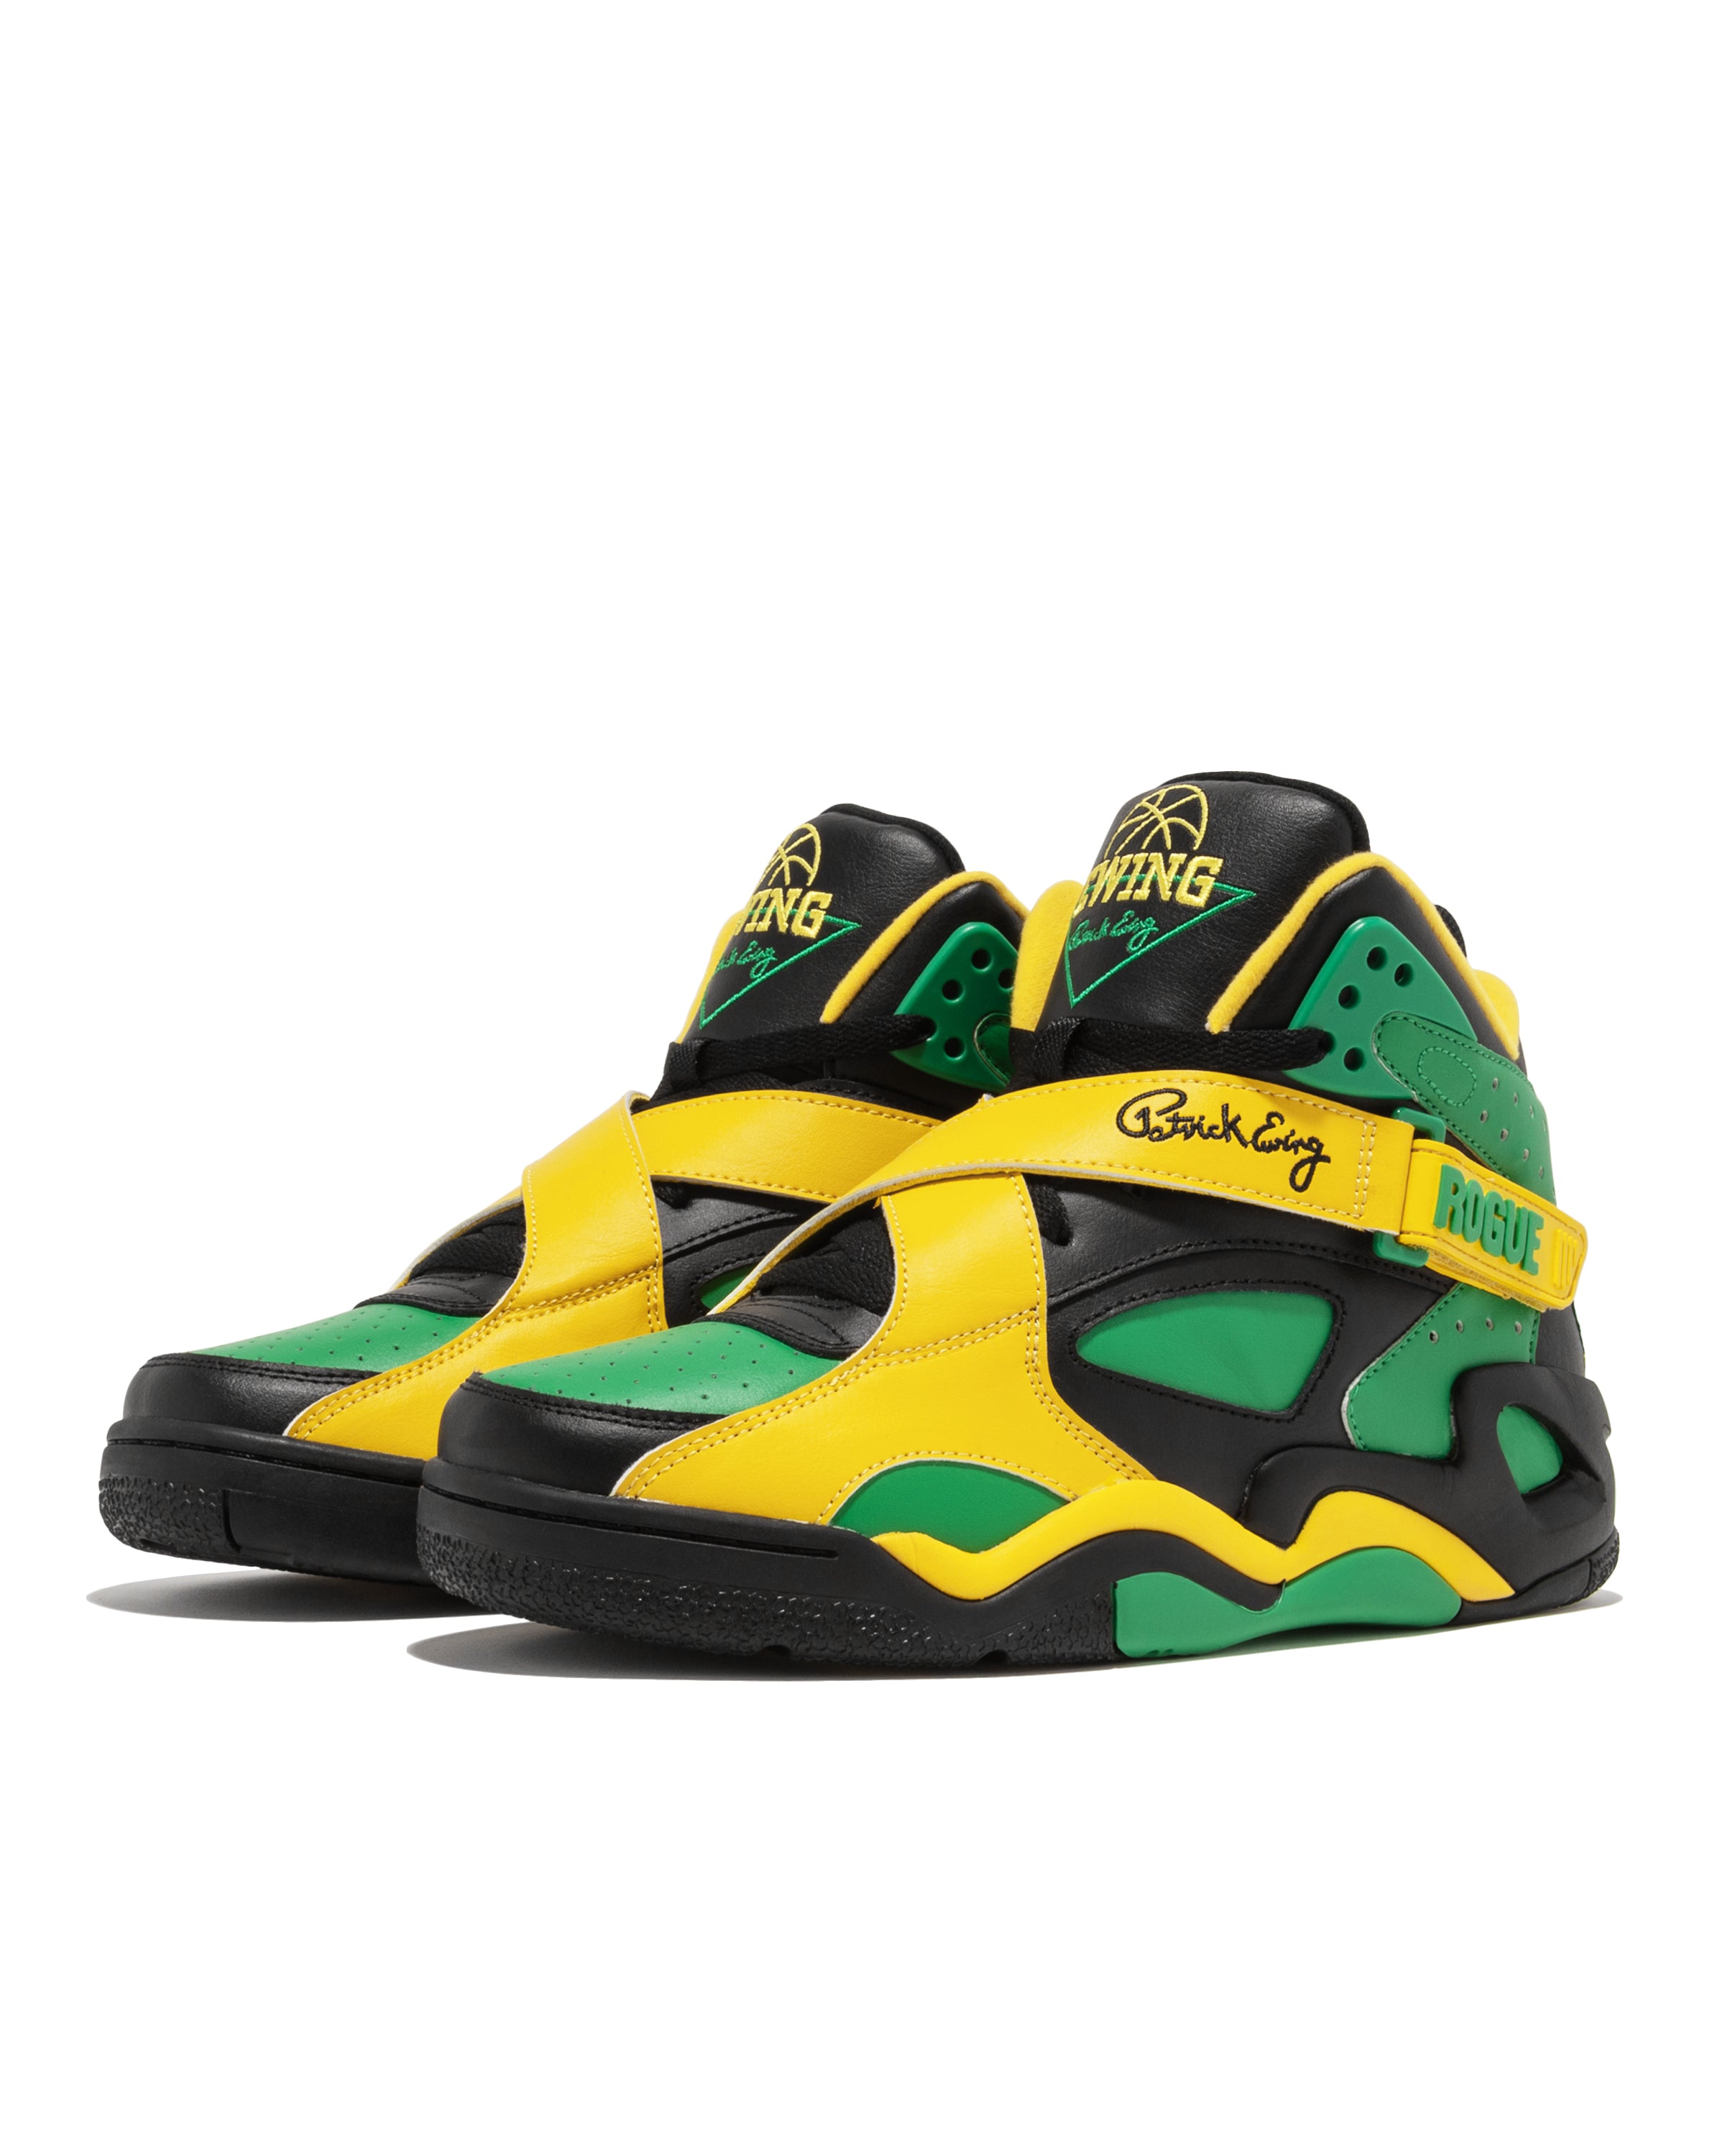 ROGUE Black/Green/Yellow JAMAICA